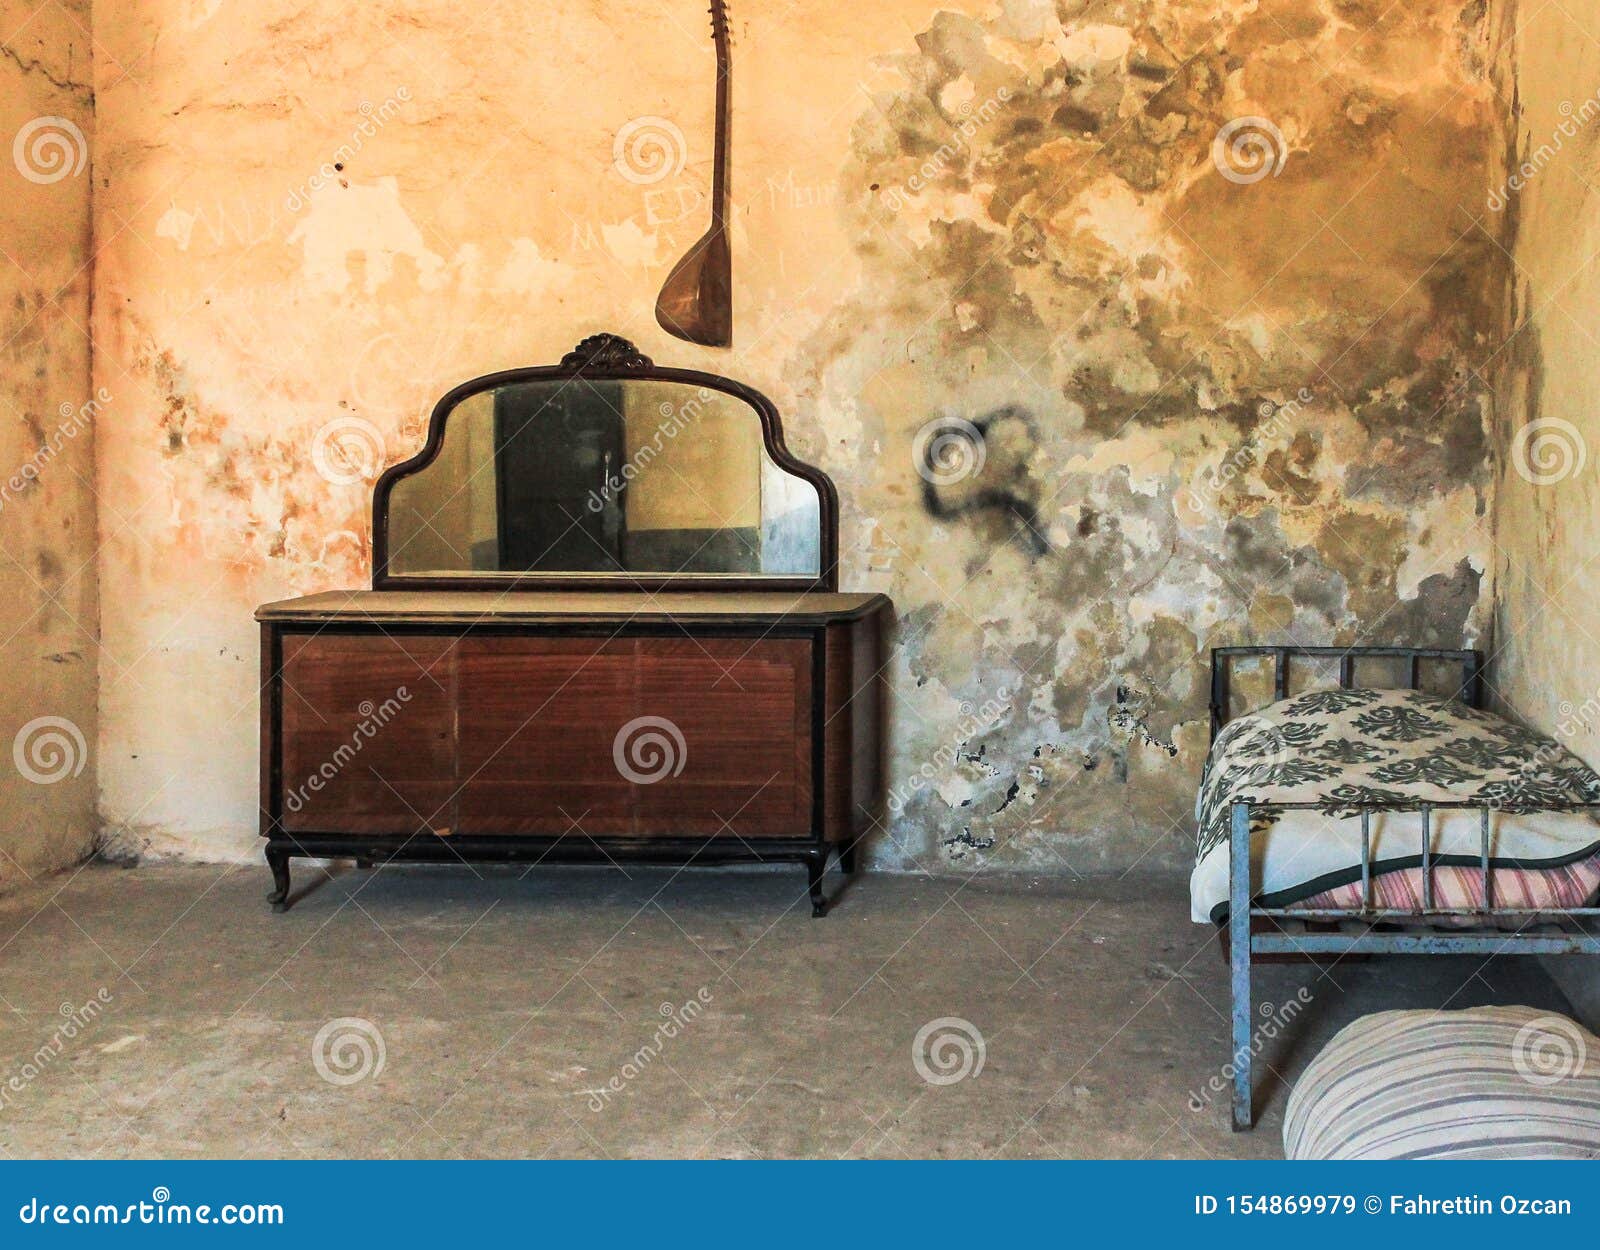 sabahattin ali`s room in sinop prison, turkey.